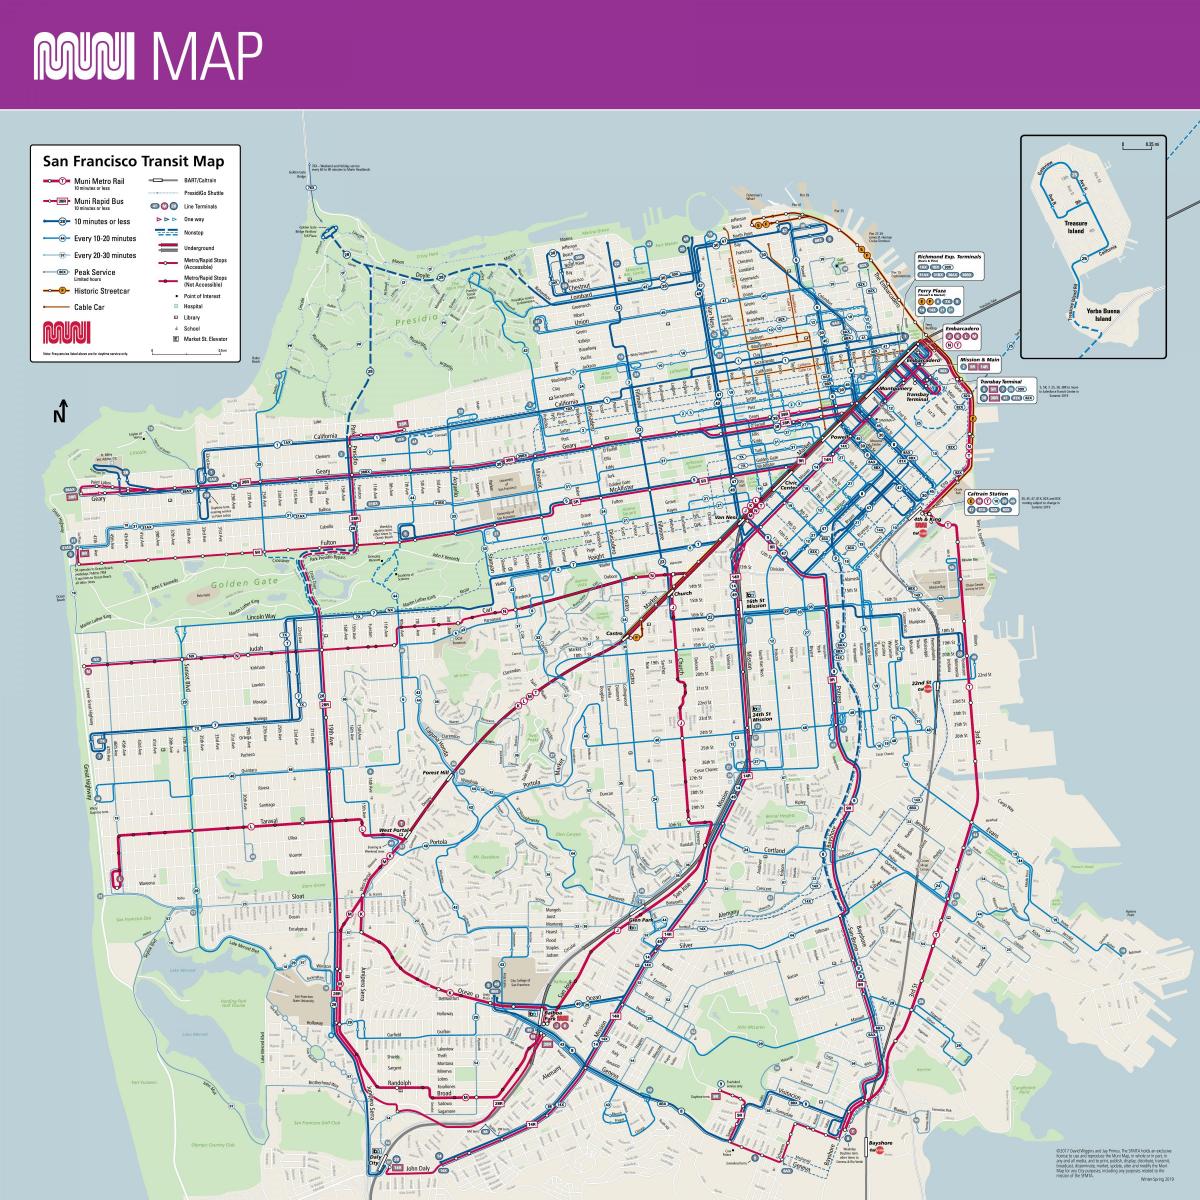 Plan des transports publics de San Francisco